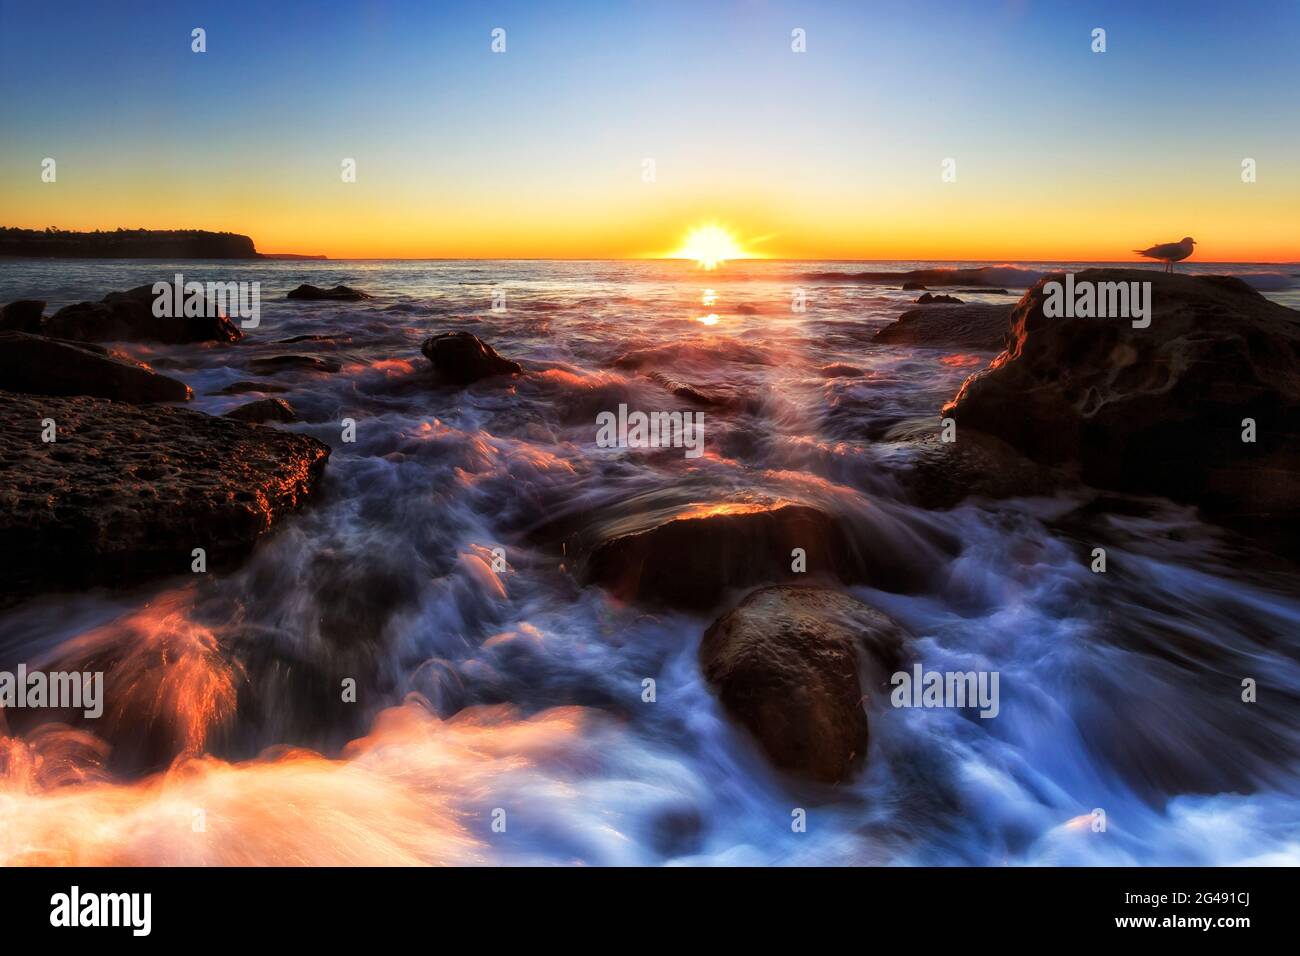 Scenic seascape sunrise of hot rising sun over Pacific ocean horizon off Newport beach in Sydney. Stock Photo